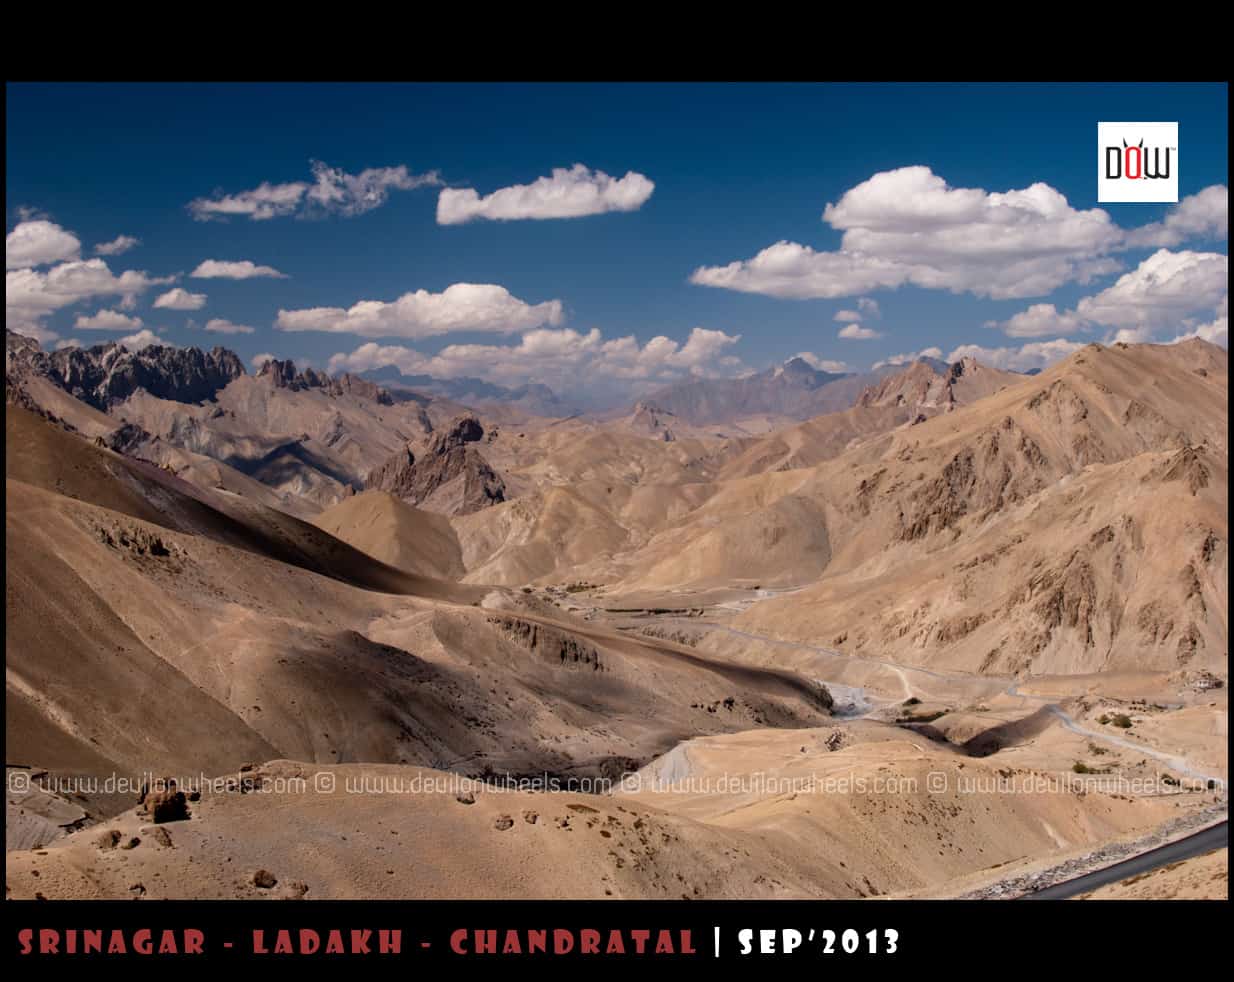 The Layers of Barren yet Beautiful Landscape on Srinagar - Leh Highway